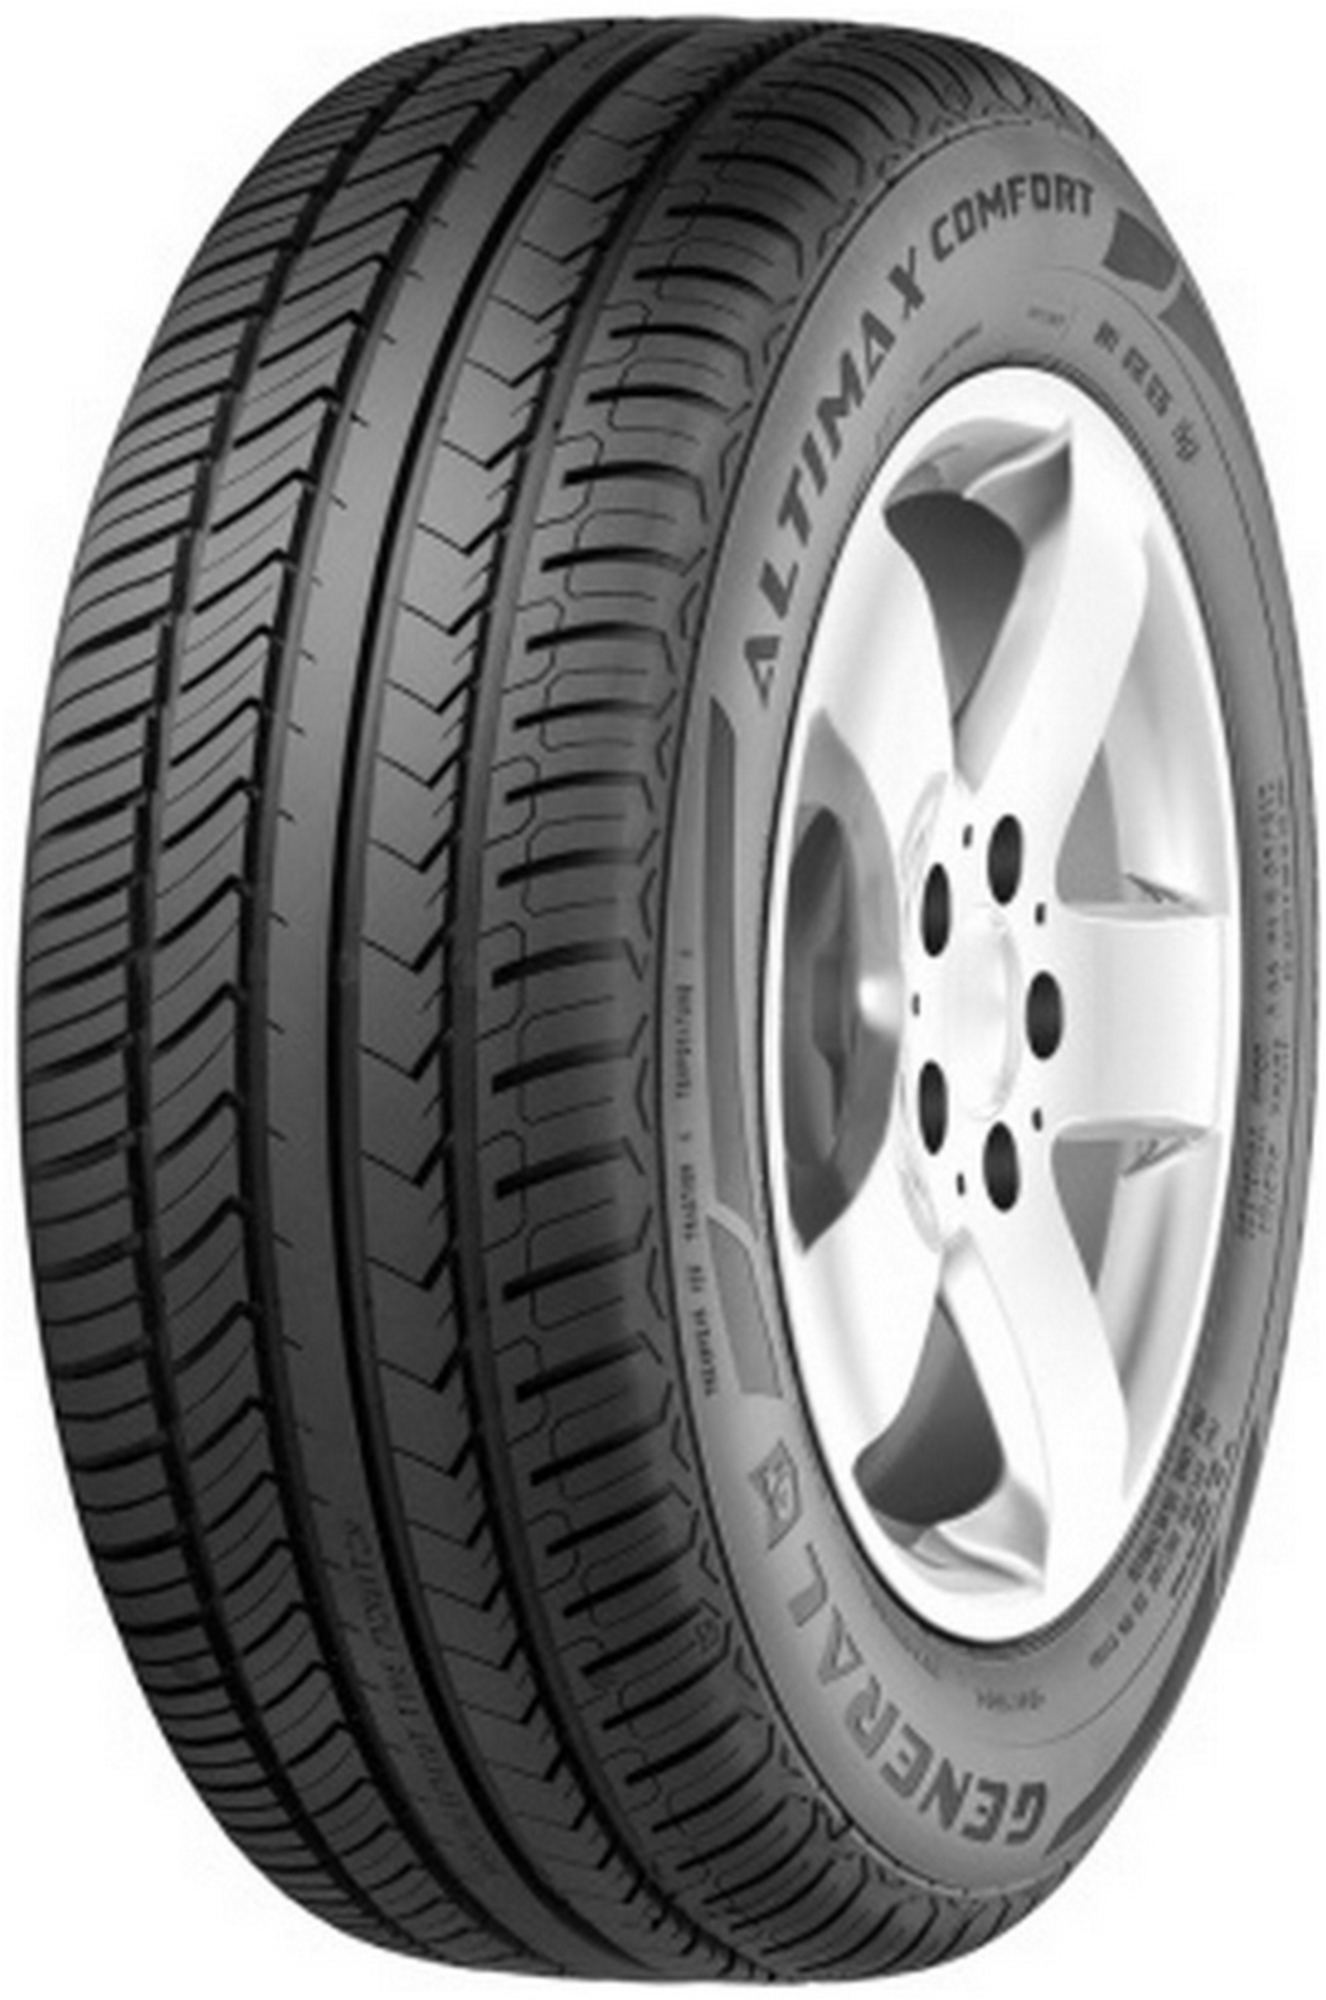 175/65r14 82t altimax comfort dot2021 (e-4.7) general tire